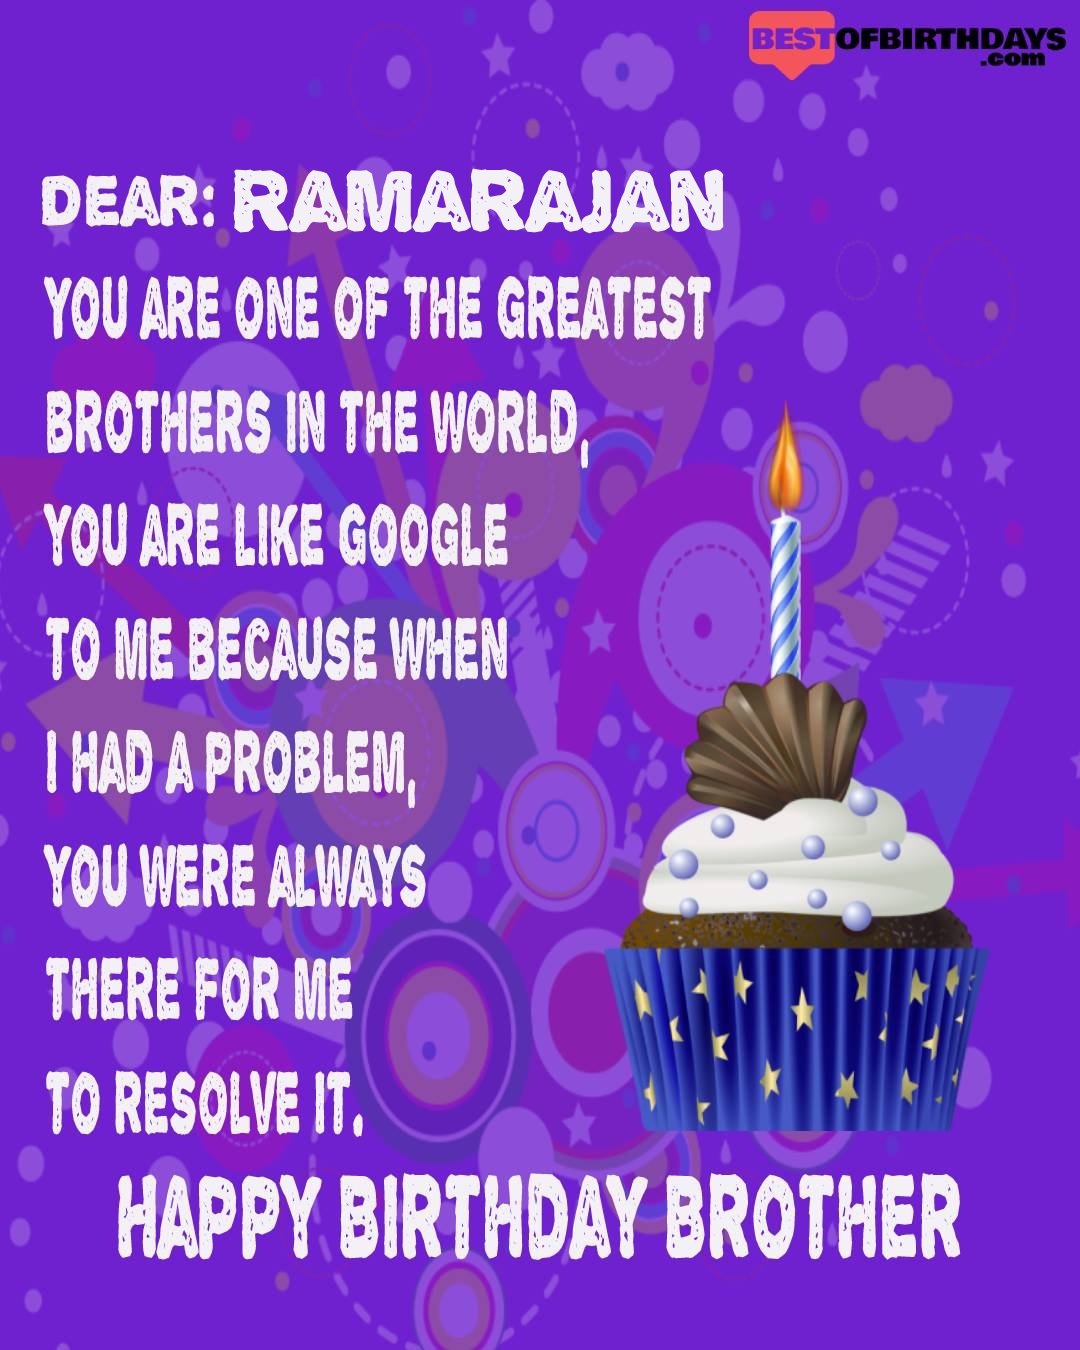 Happy birthday ramarajan bhai brother bro